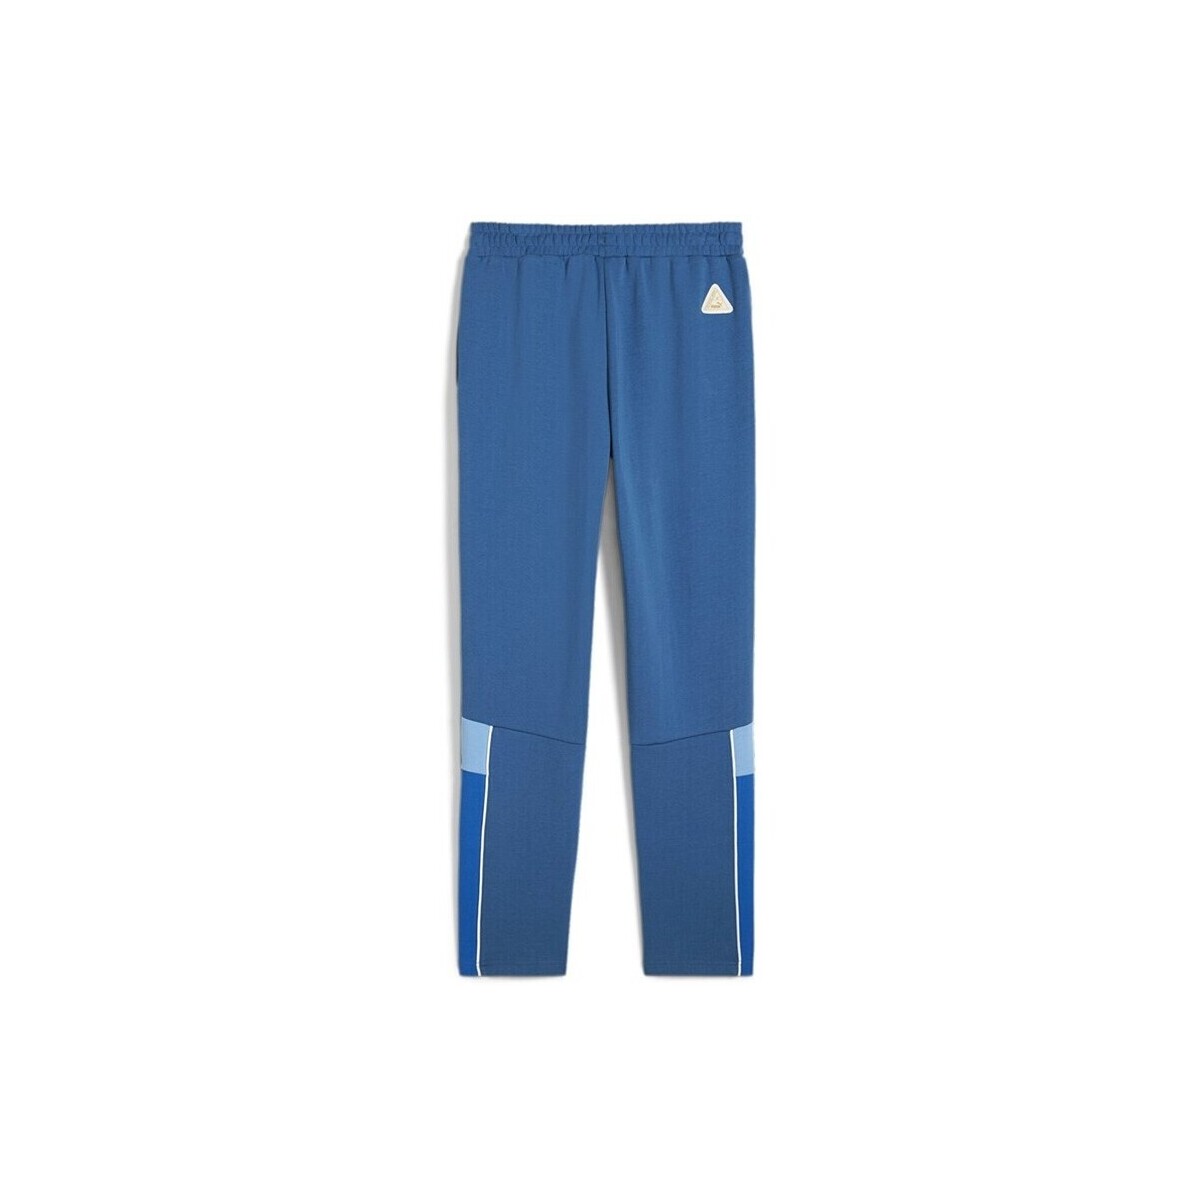 Abbigliamento Uomo Pantaloni Puma Pantaloni Uomo Calcio Manchester City FC Blu